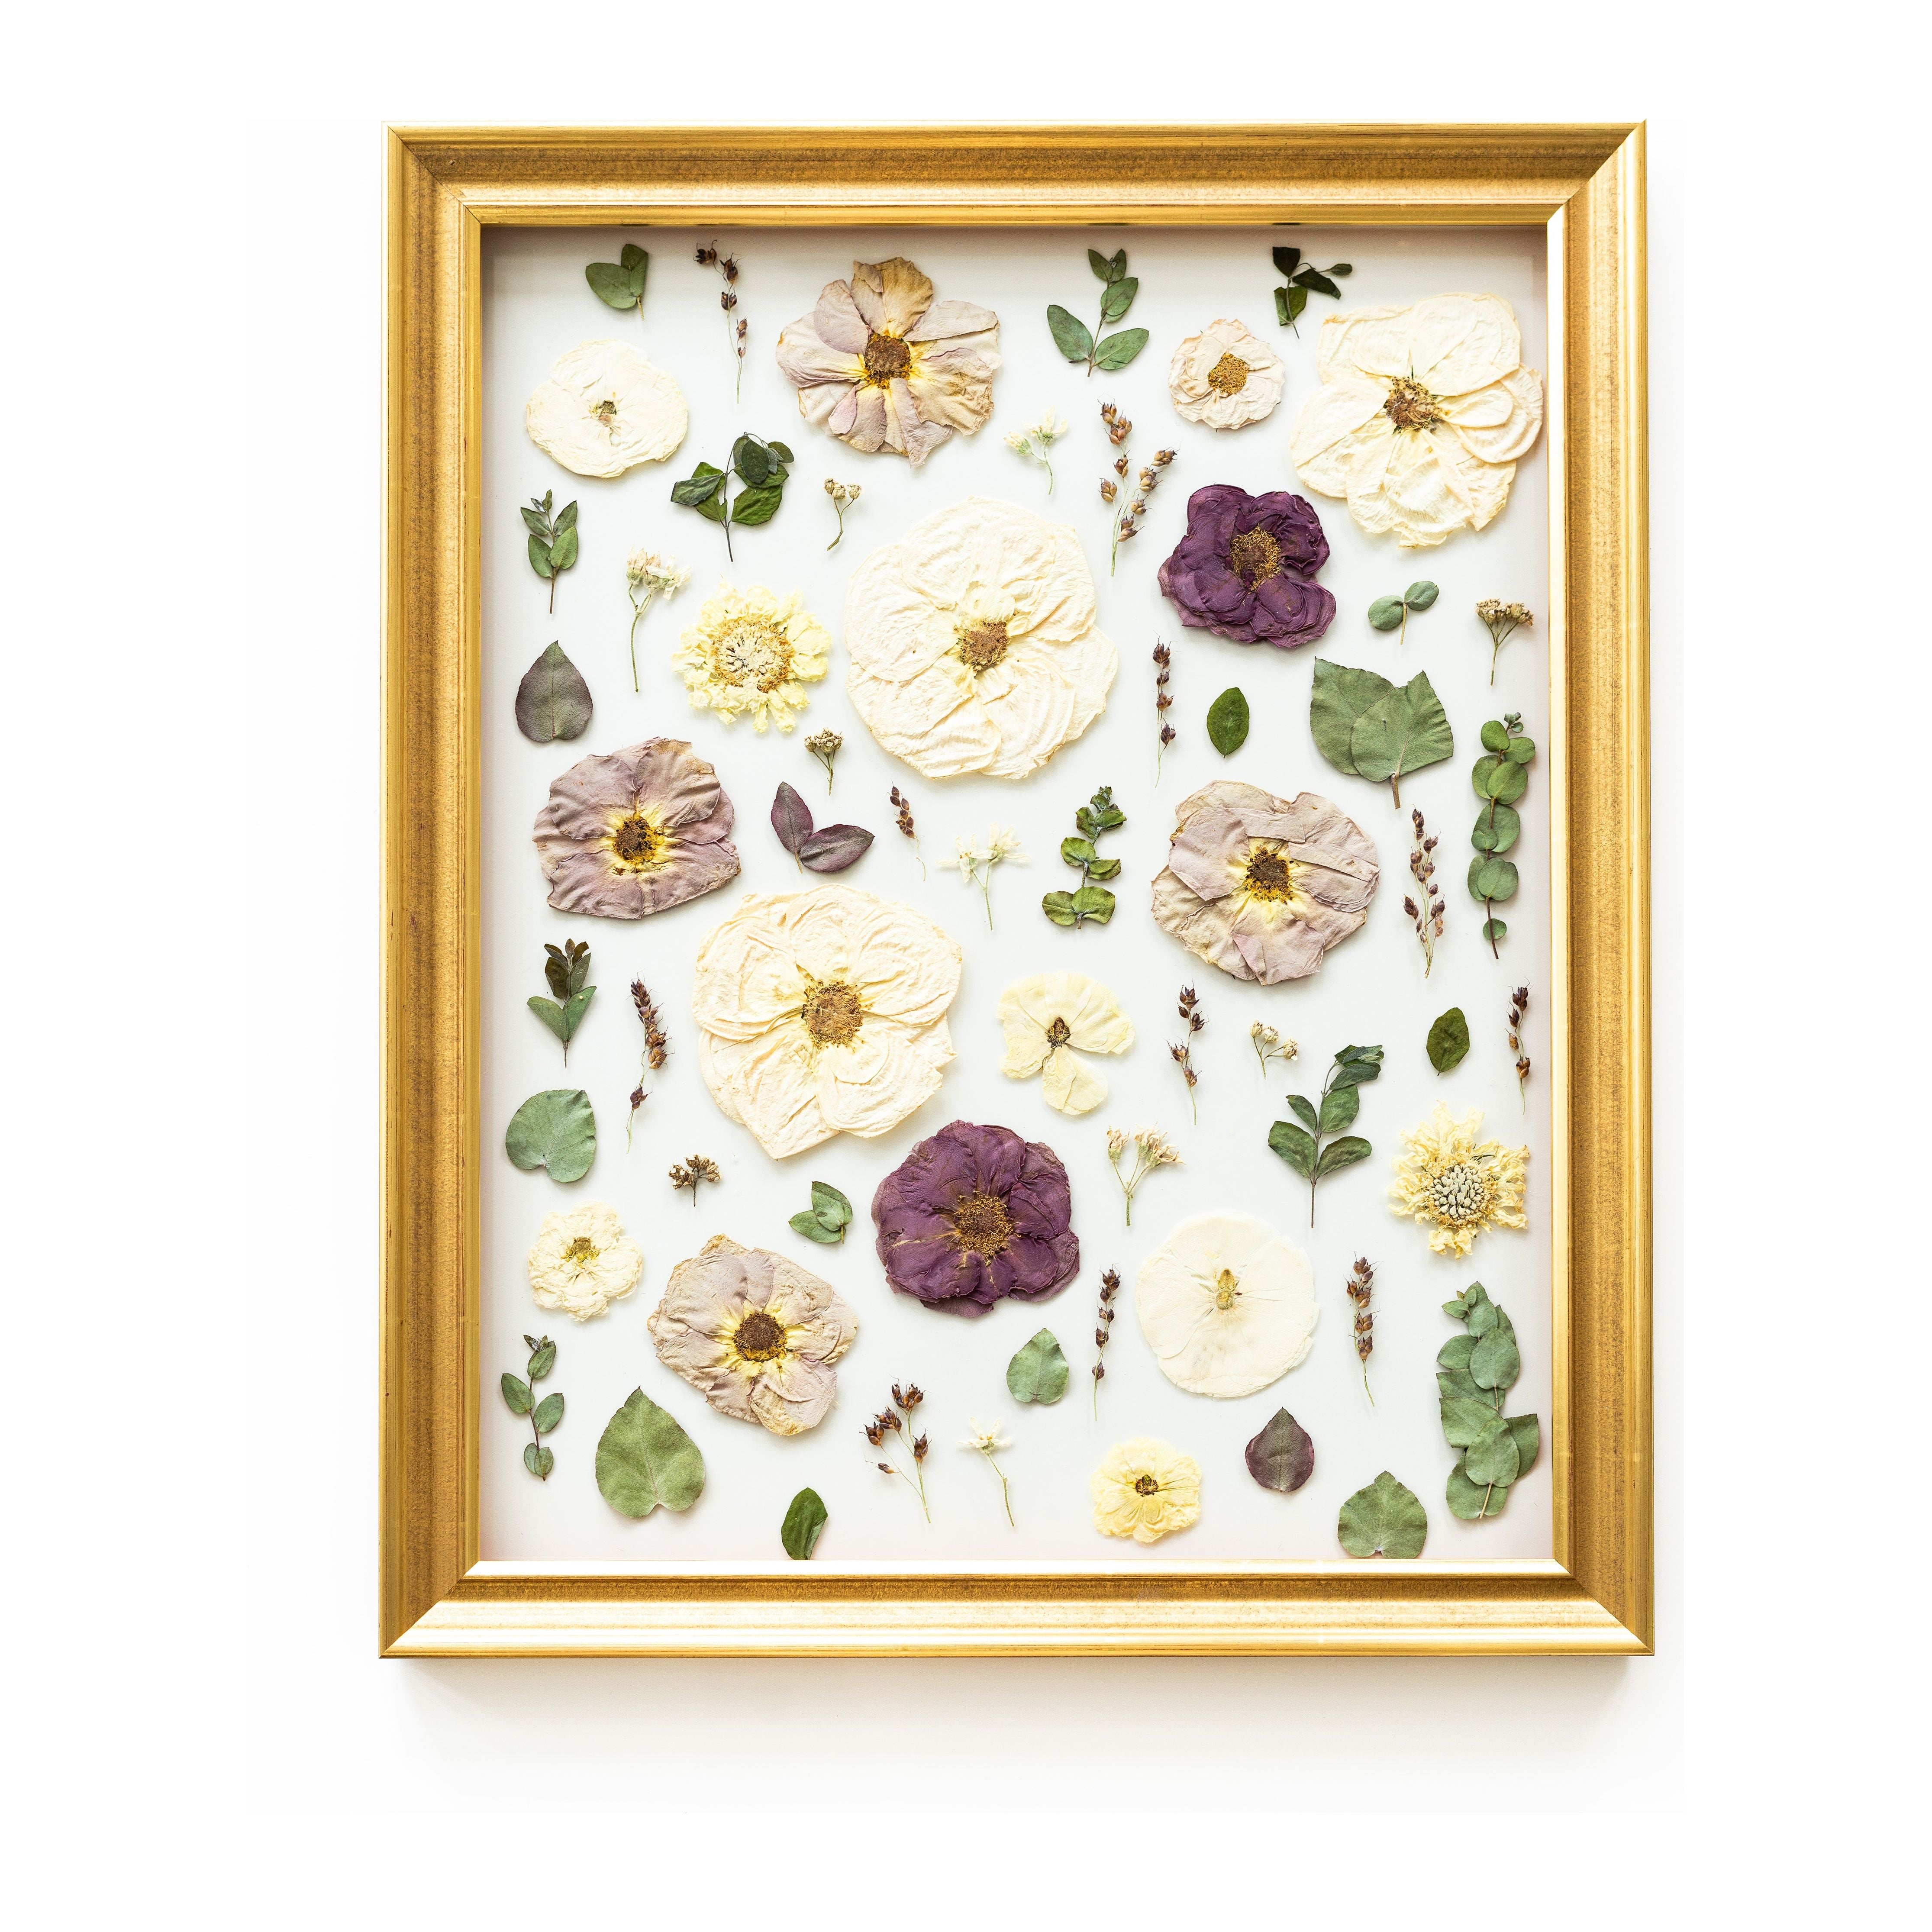 Flower Press – The Glass Hall